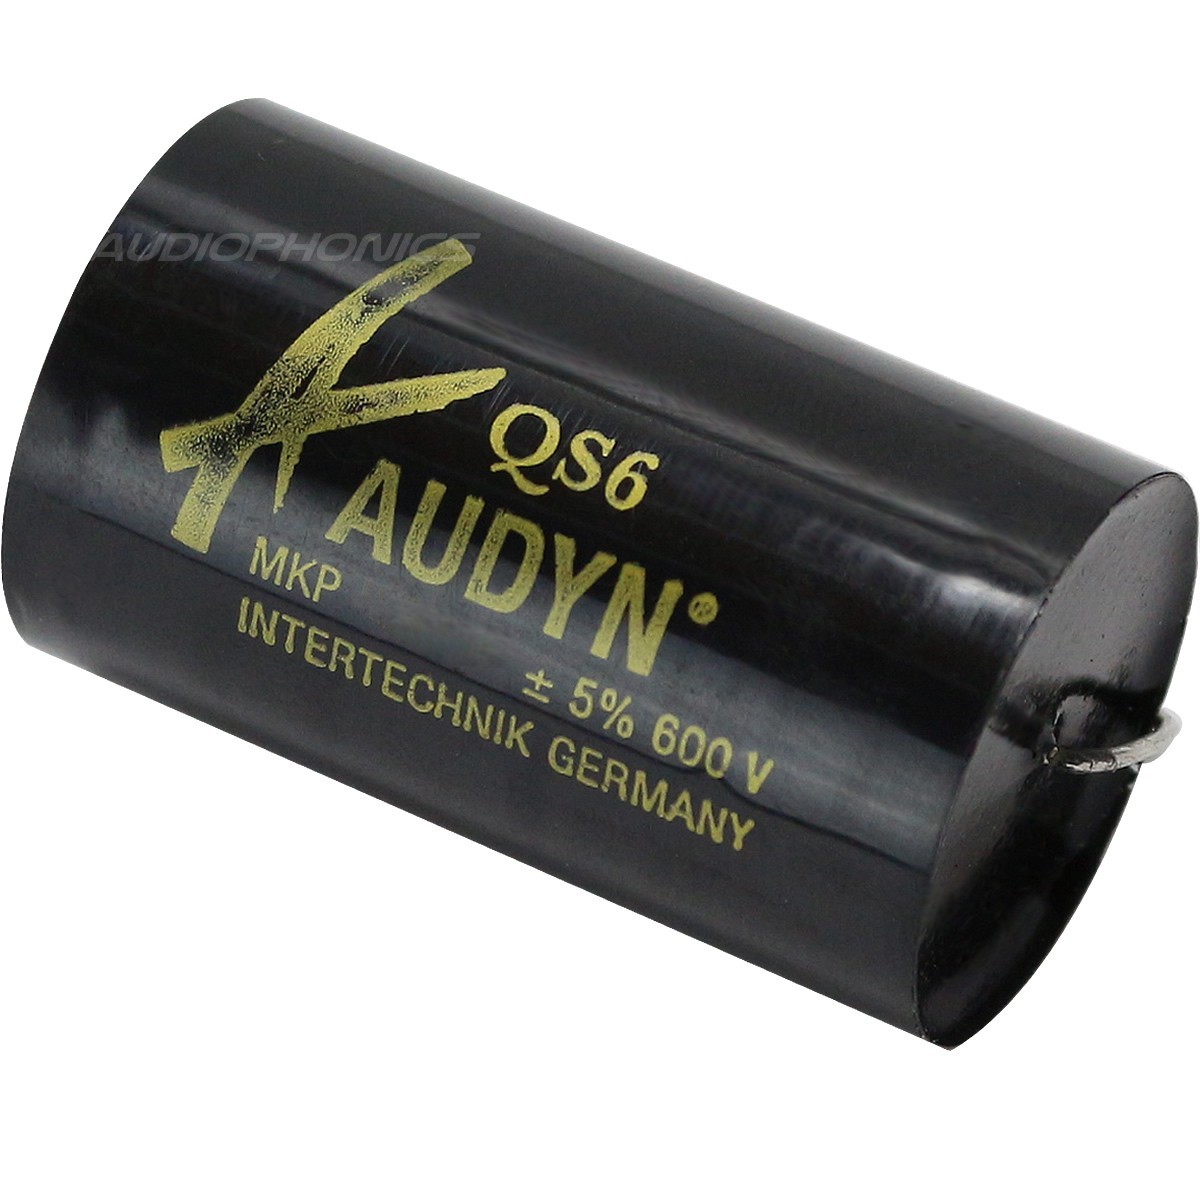 AUDYN CAP QS6 Condensateur MKP 600V 0.22µF